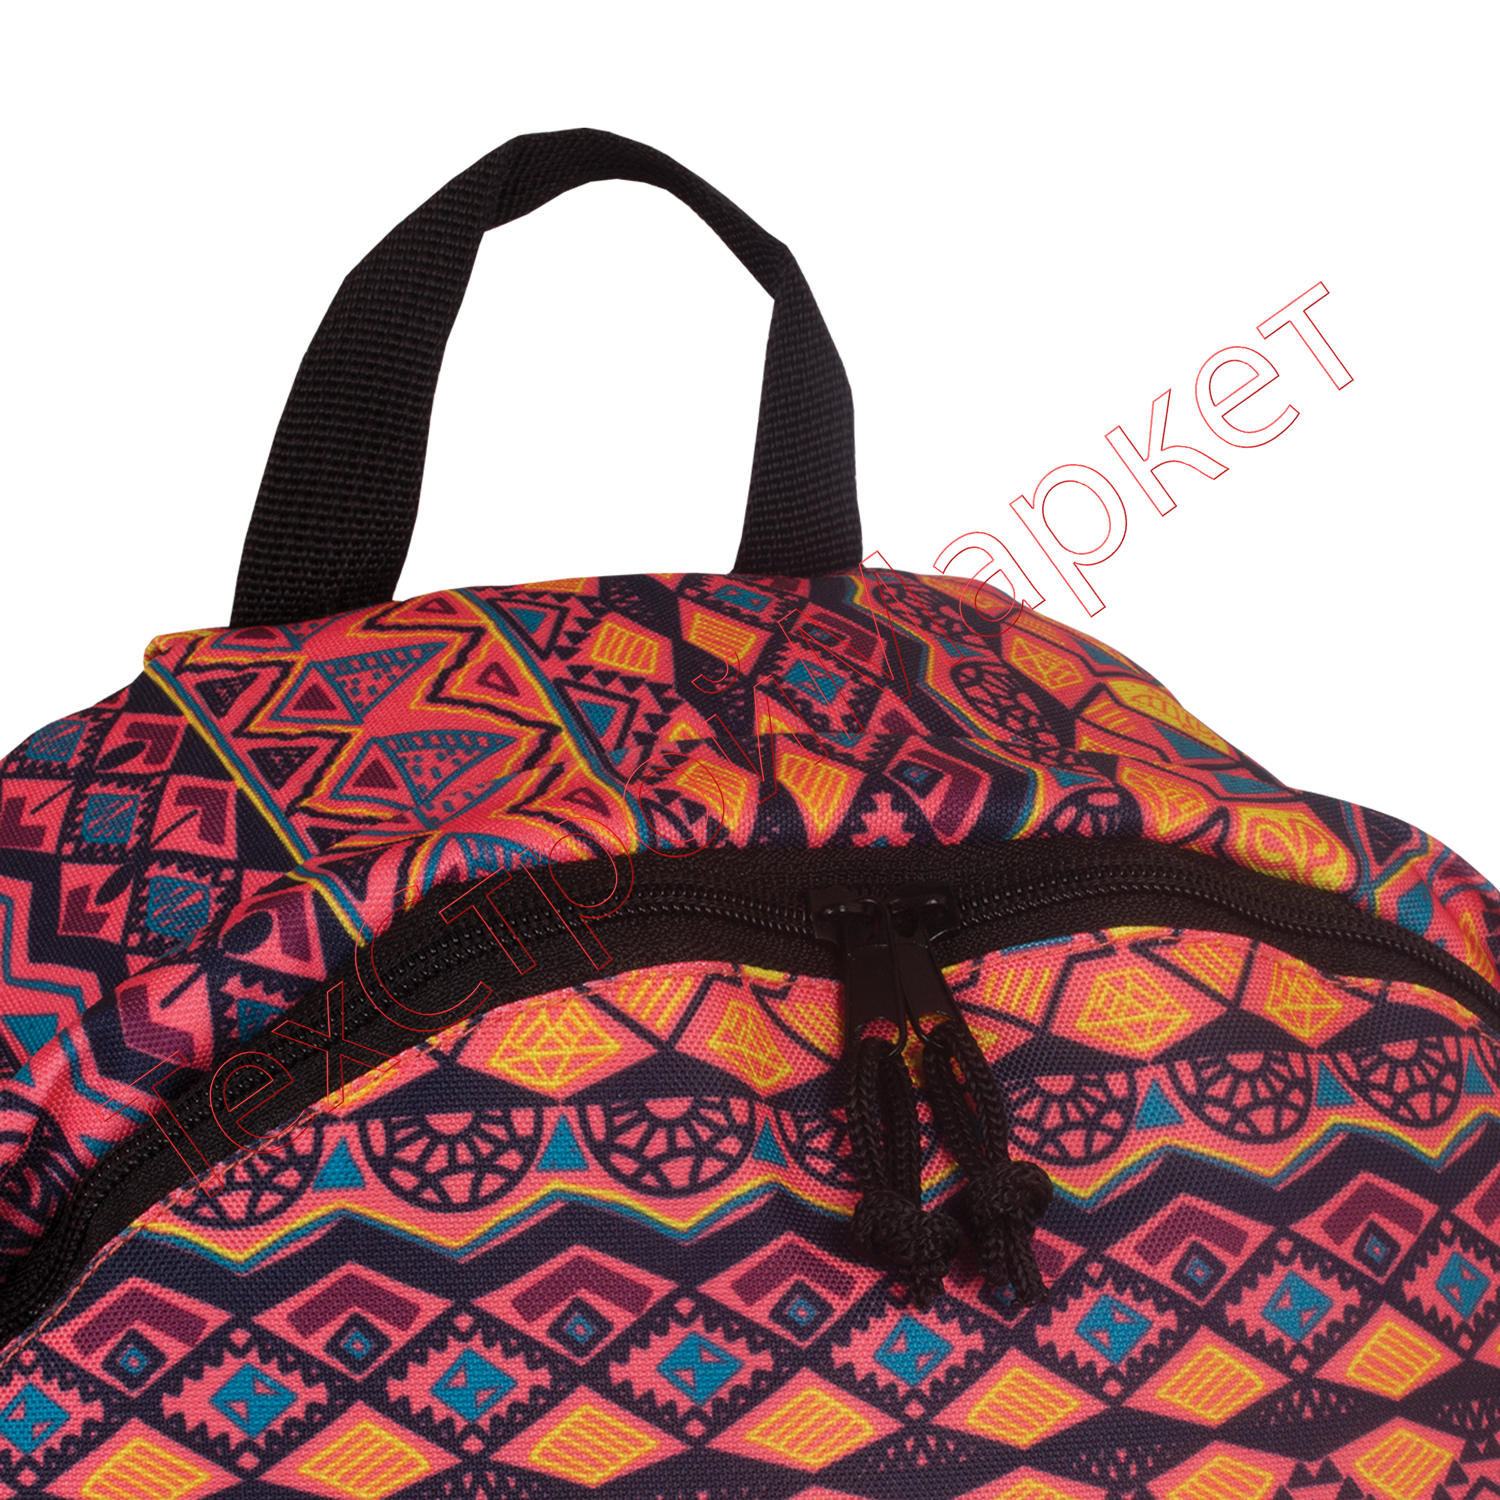 Рюкзак BRAUBERG универсальный, сити-формат, оранжевый, "Сафари", 23 литра, 43х34х15 см, 226413